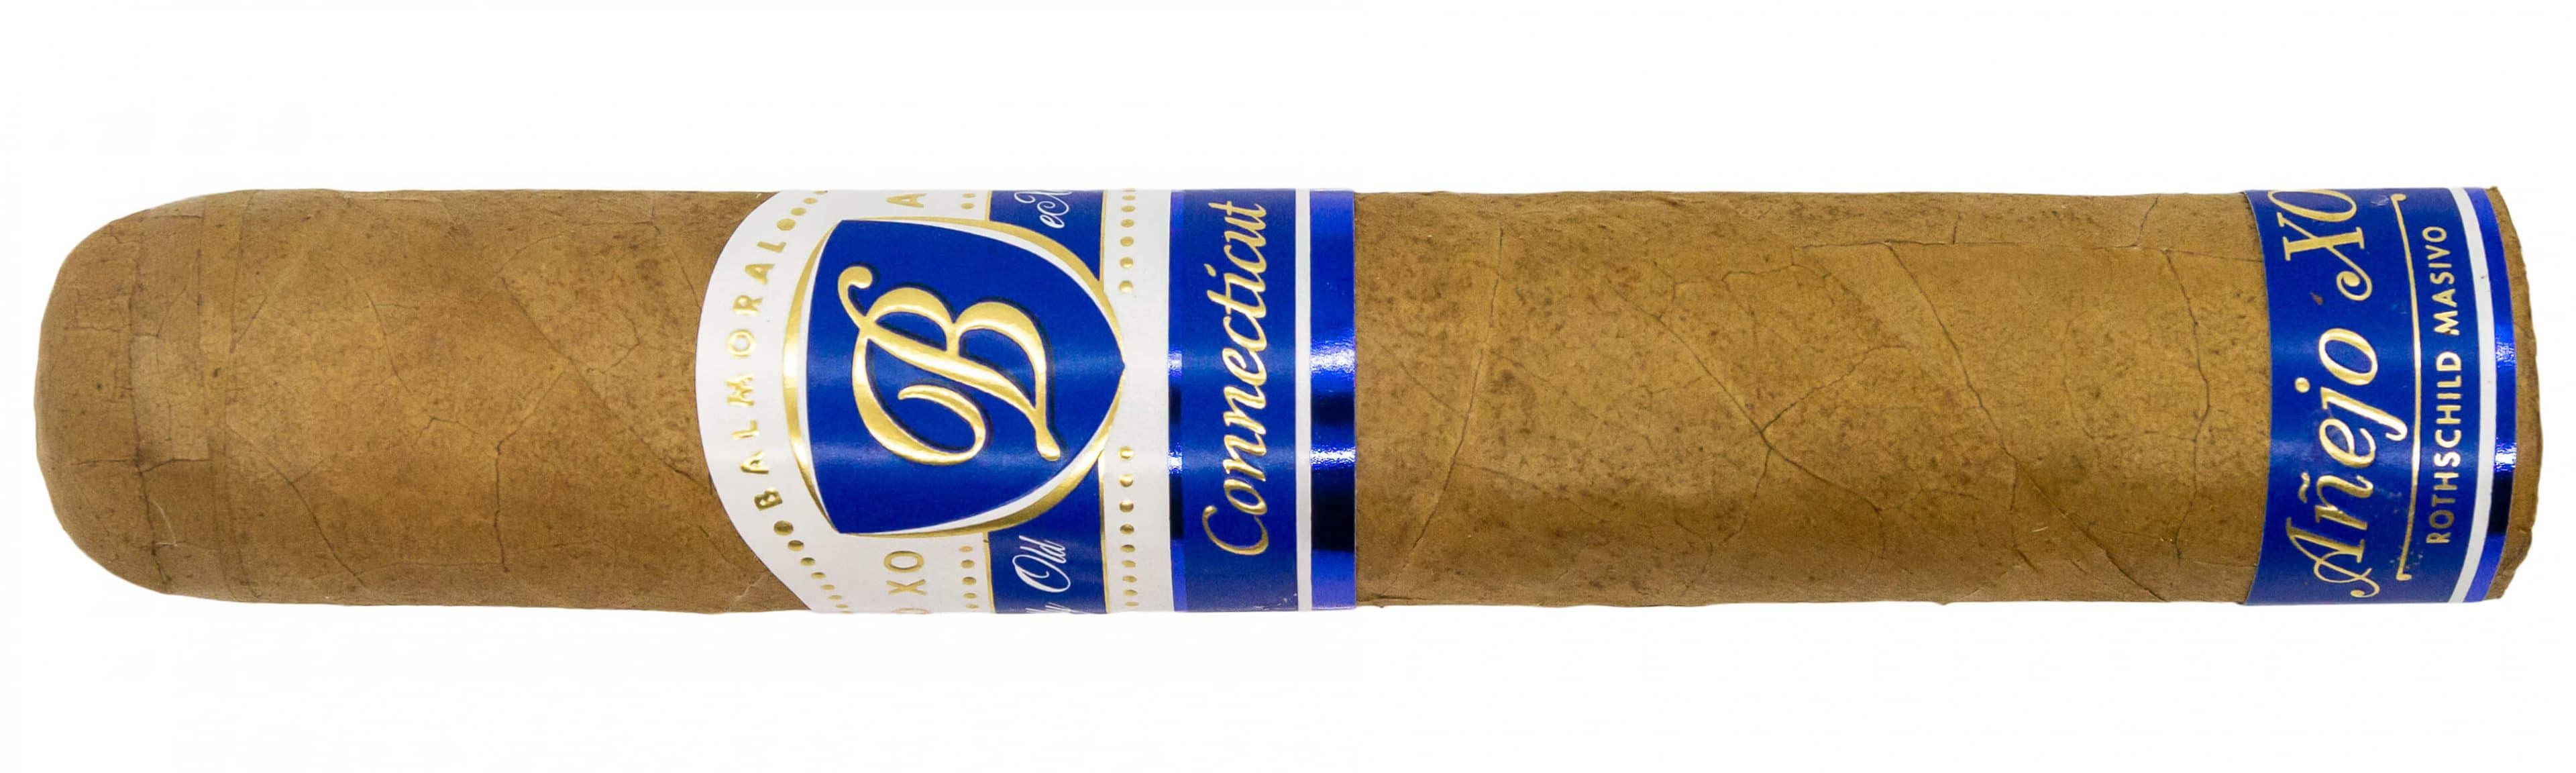 Blind Cigar Review: Balmoral | Anejo XO Connecticut Rothschild Masivo